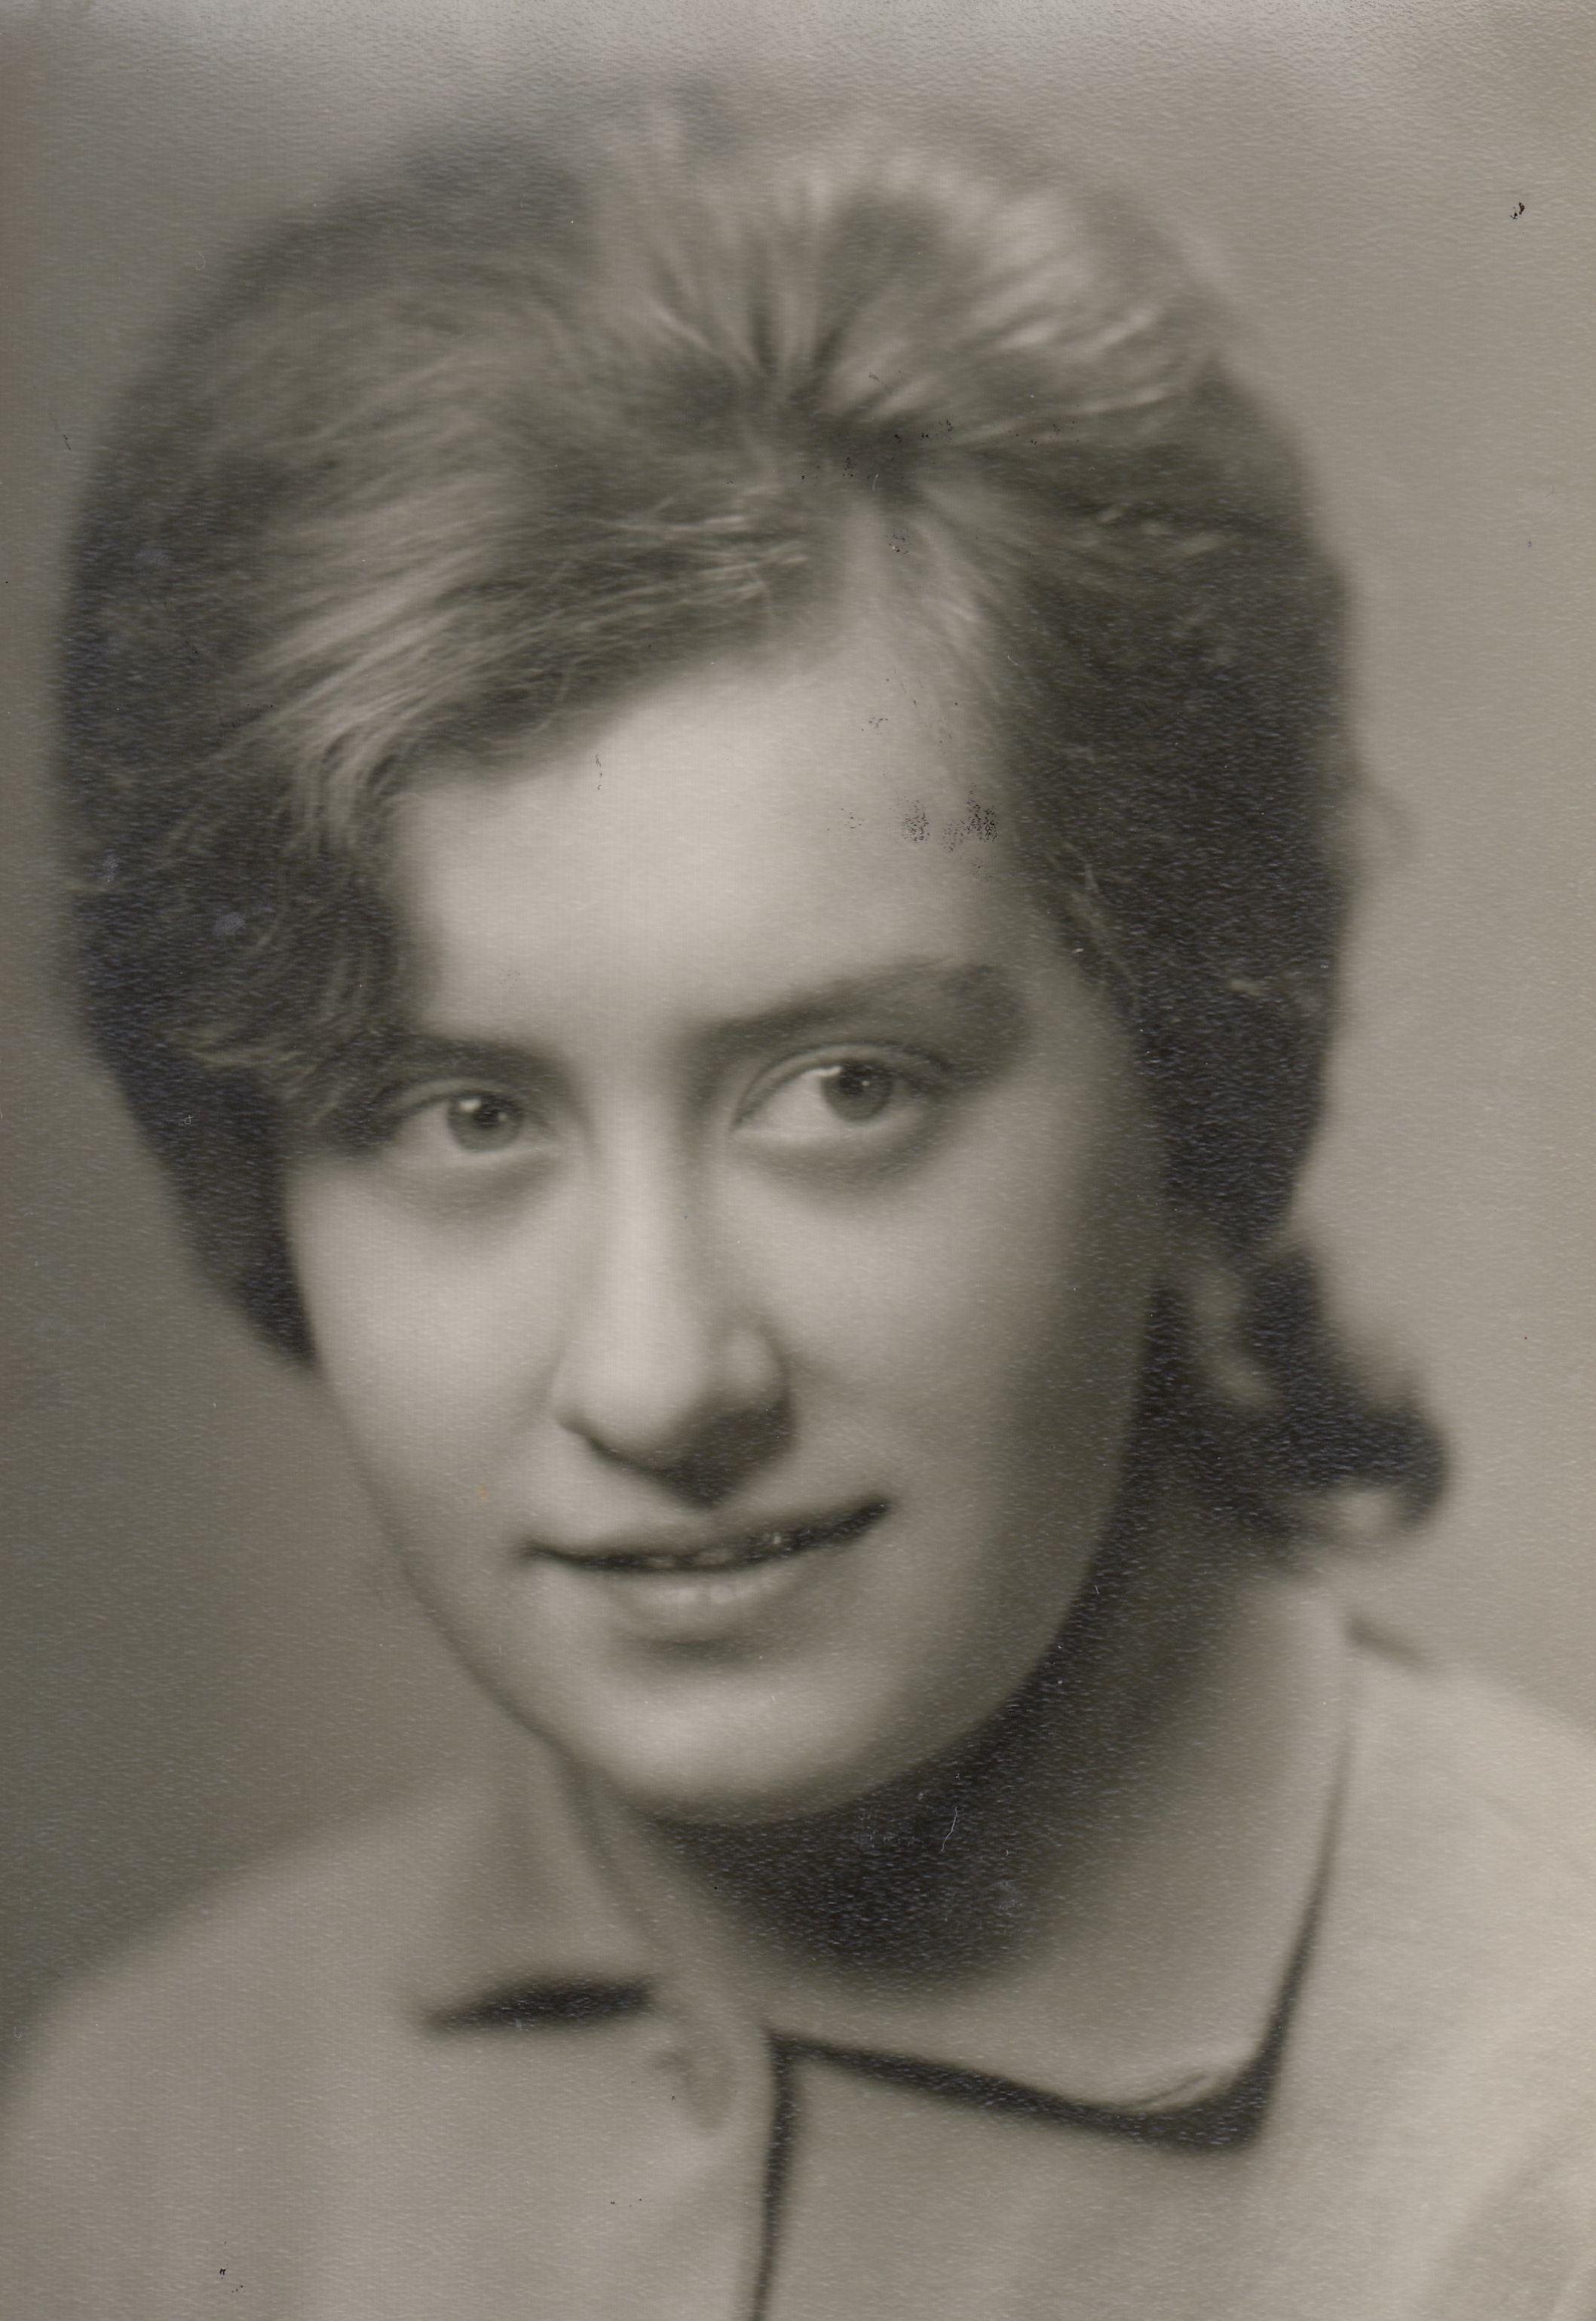 Anna Antlová, neé Mátlová, graduation photo, 1963